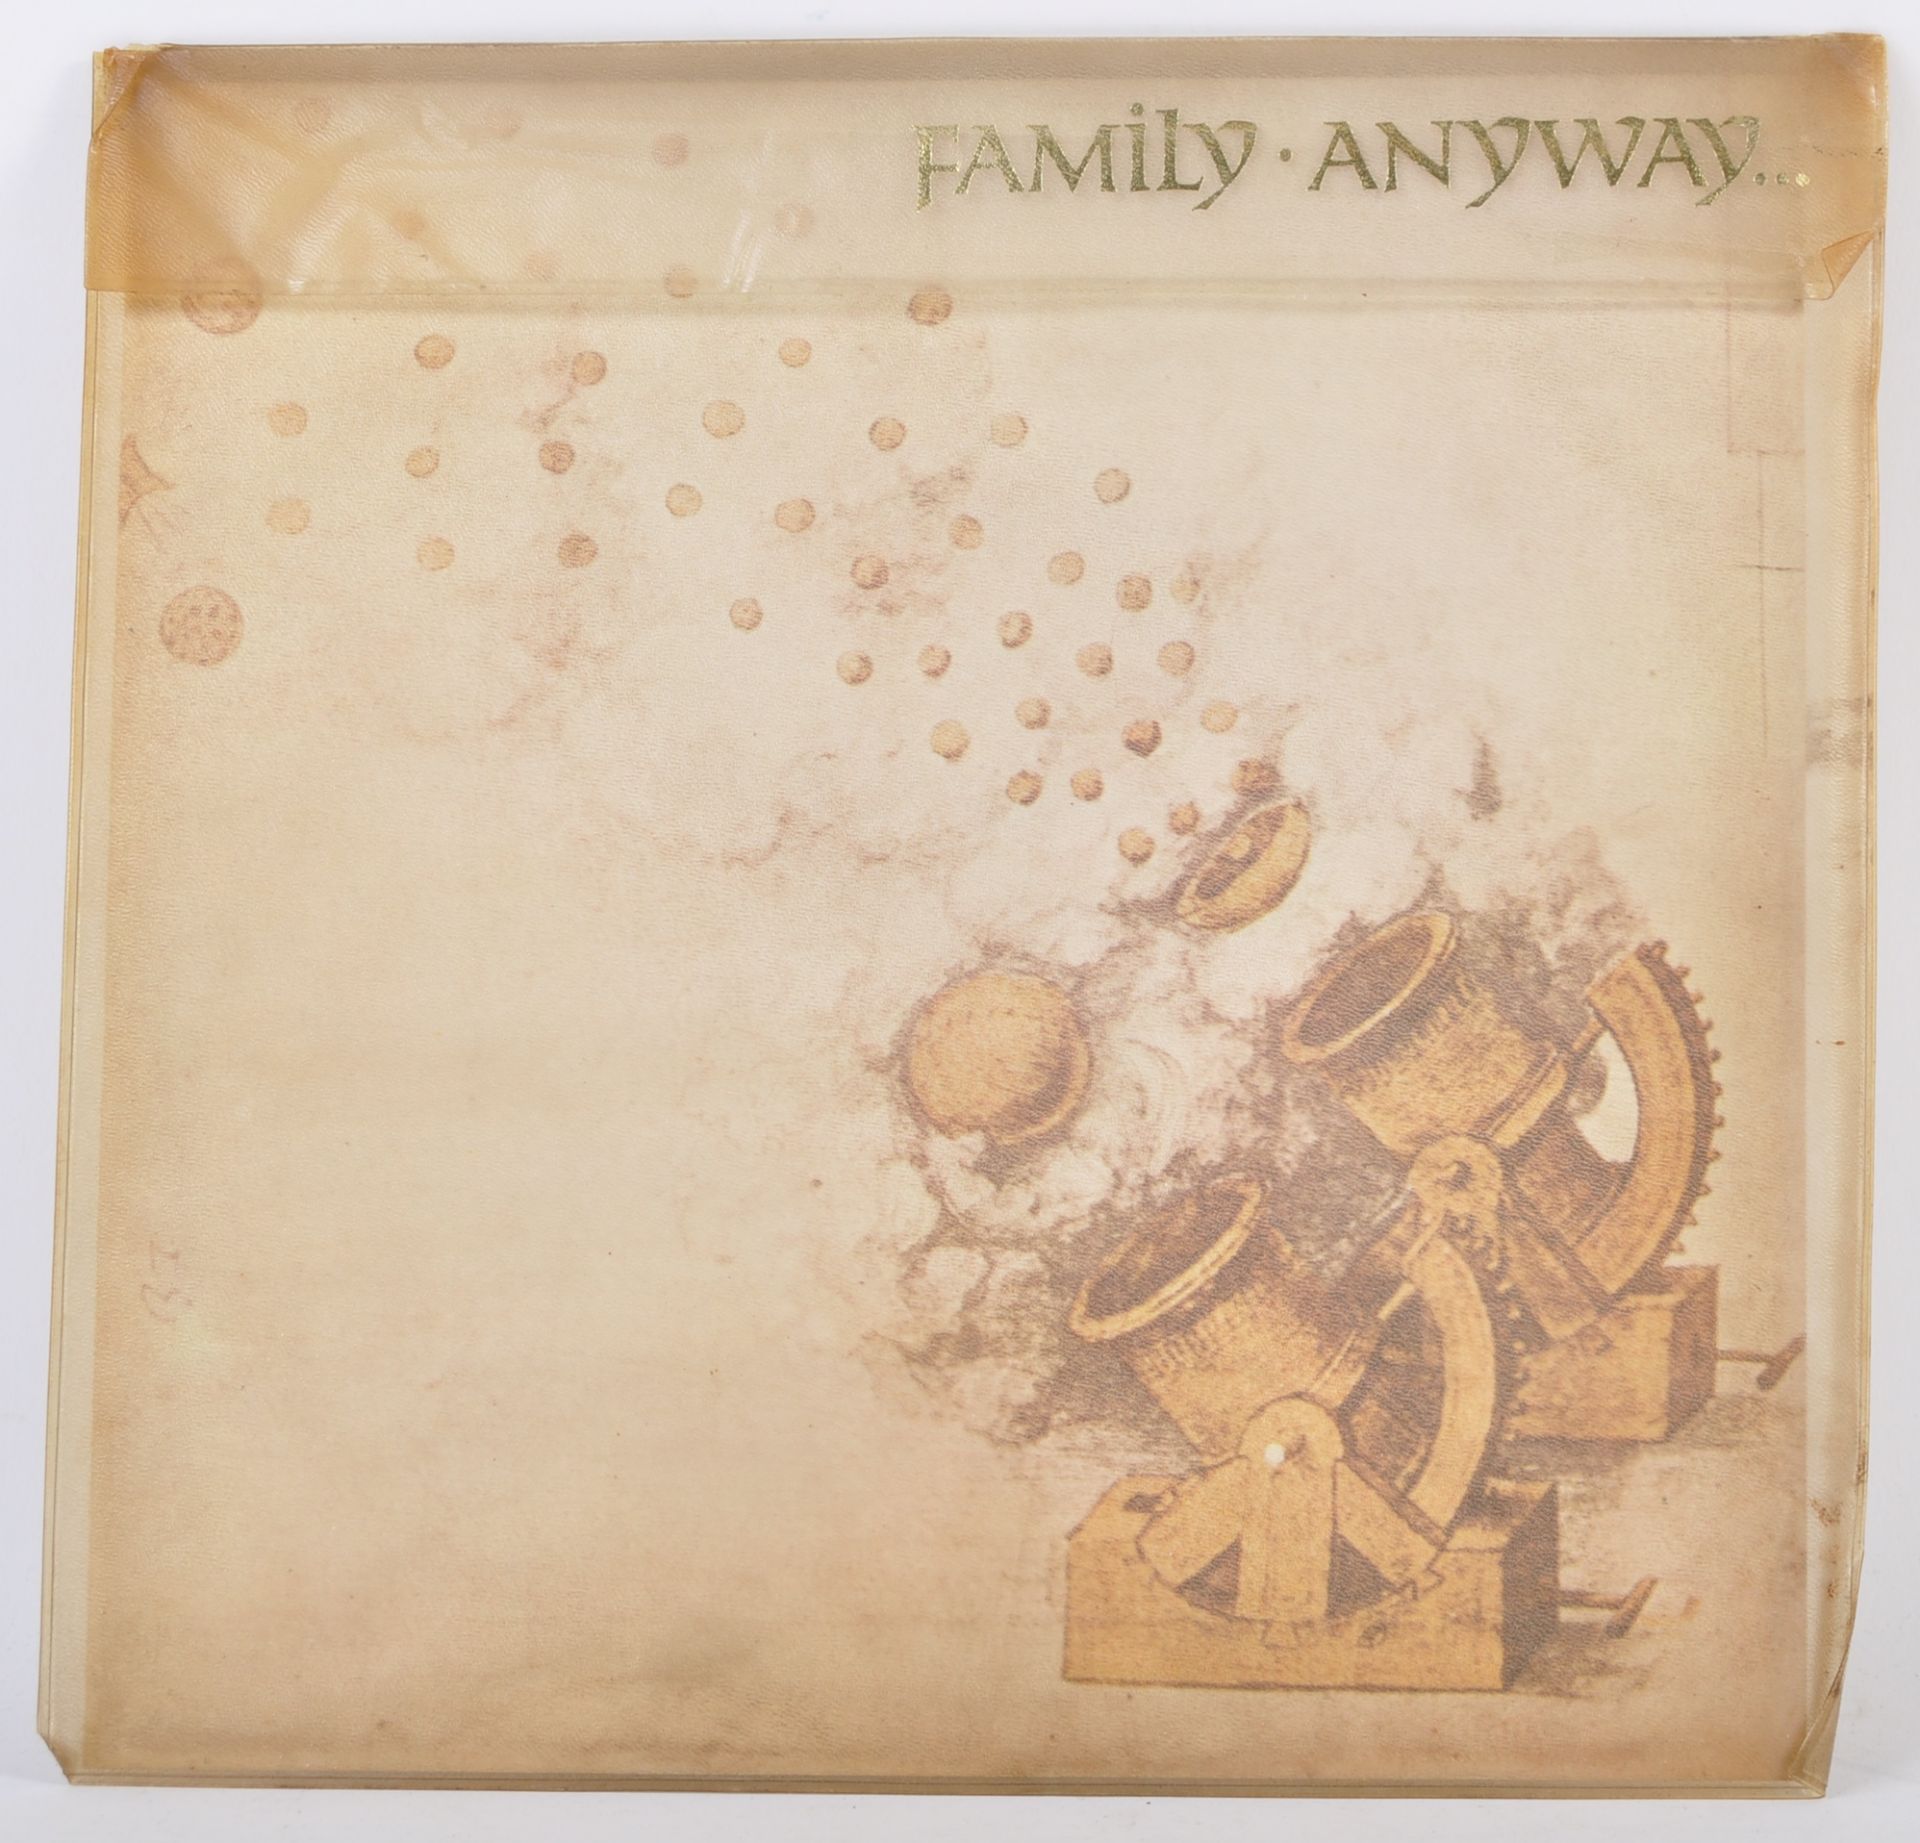 FAMILY - ANYWAY - 1970 REPRISE RECORDS LP ALBUM